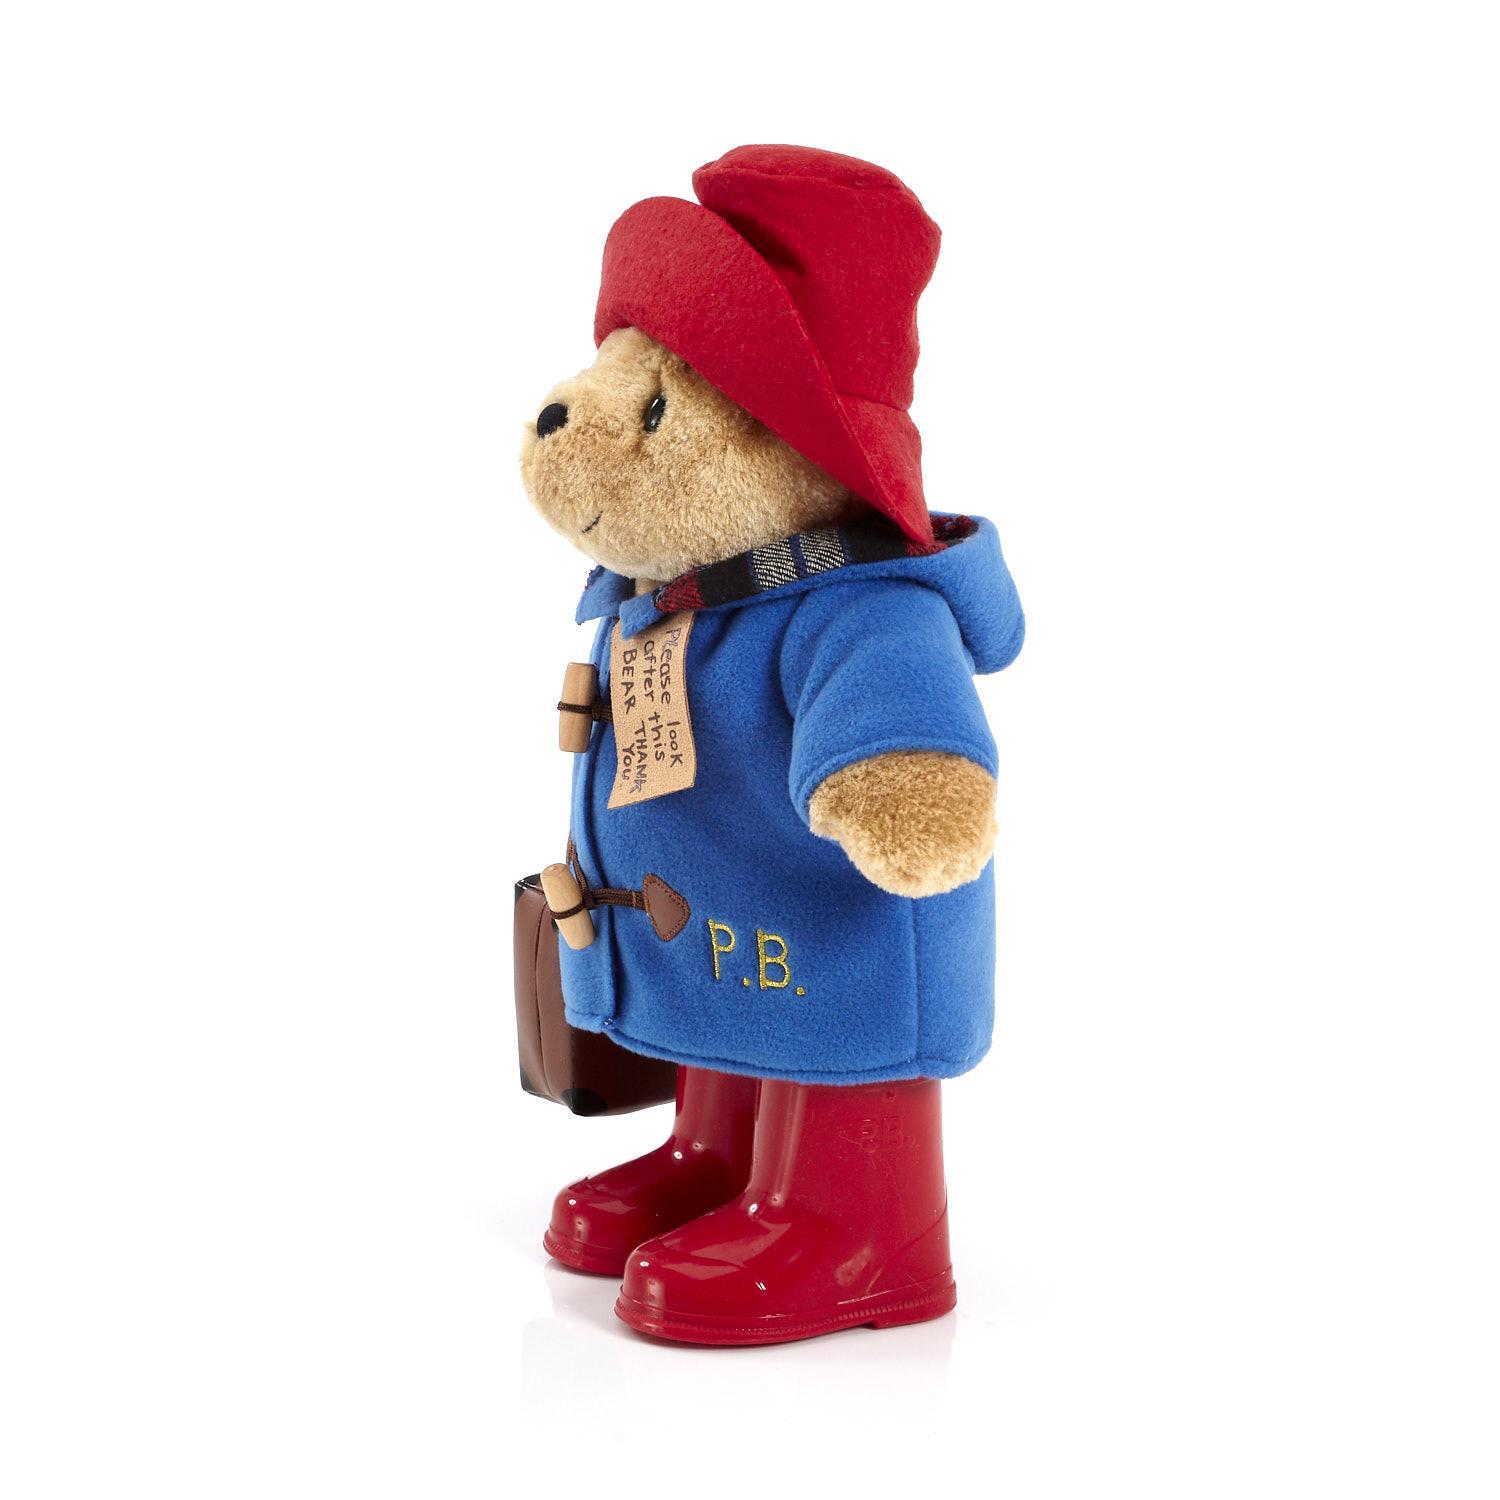 NEW Paddington Bear with Boots and Suitcase Large 34cm Plush Toy *FREE AU  POST!*